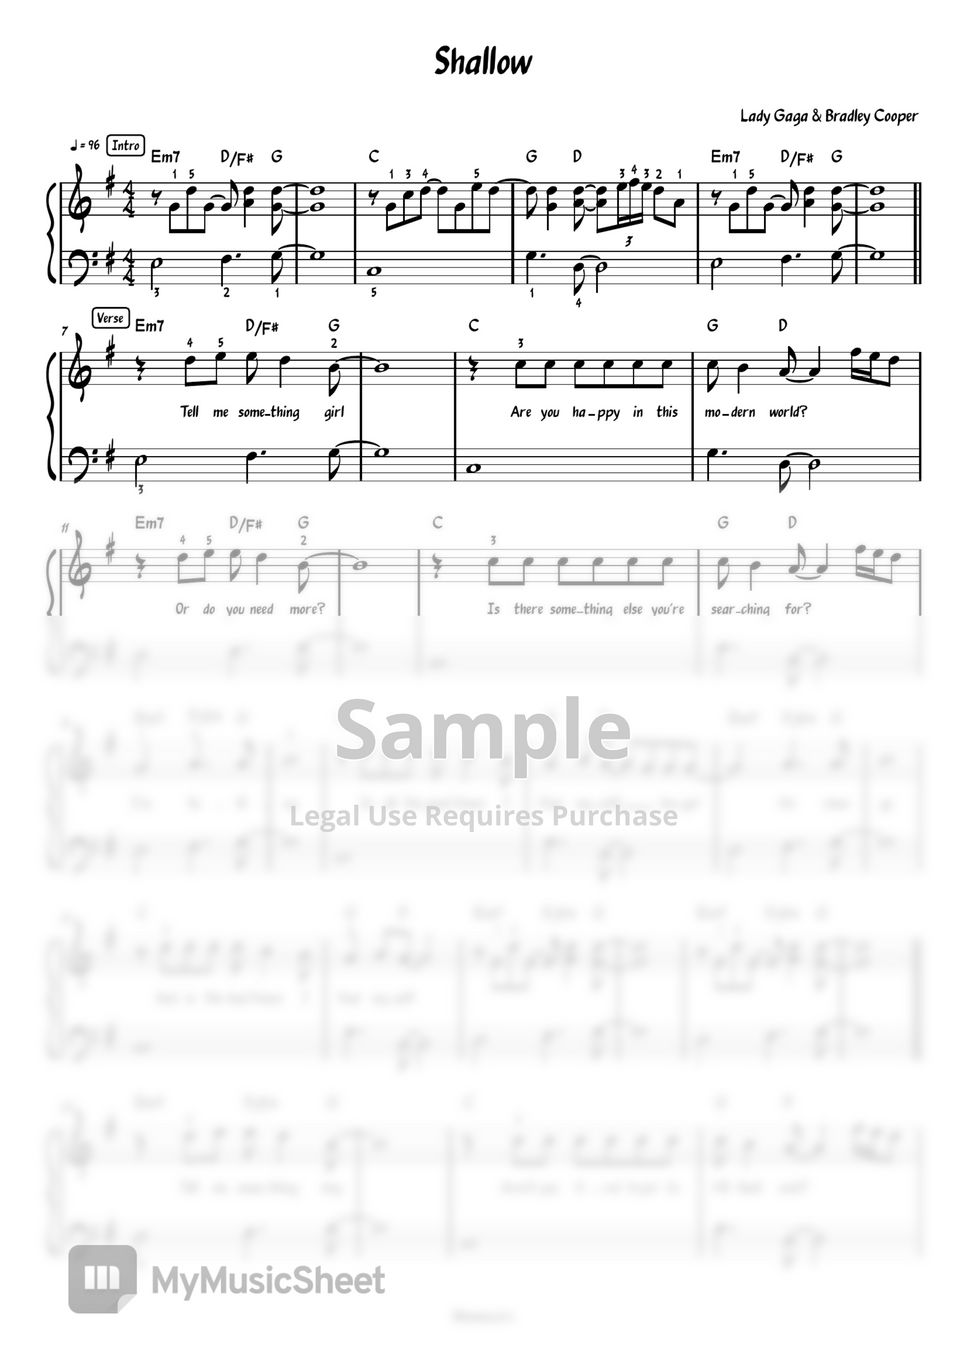 Lady Gaga - Shallow (Piano) by Meowscore